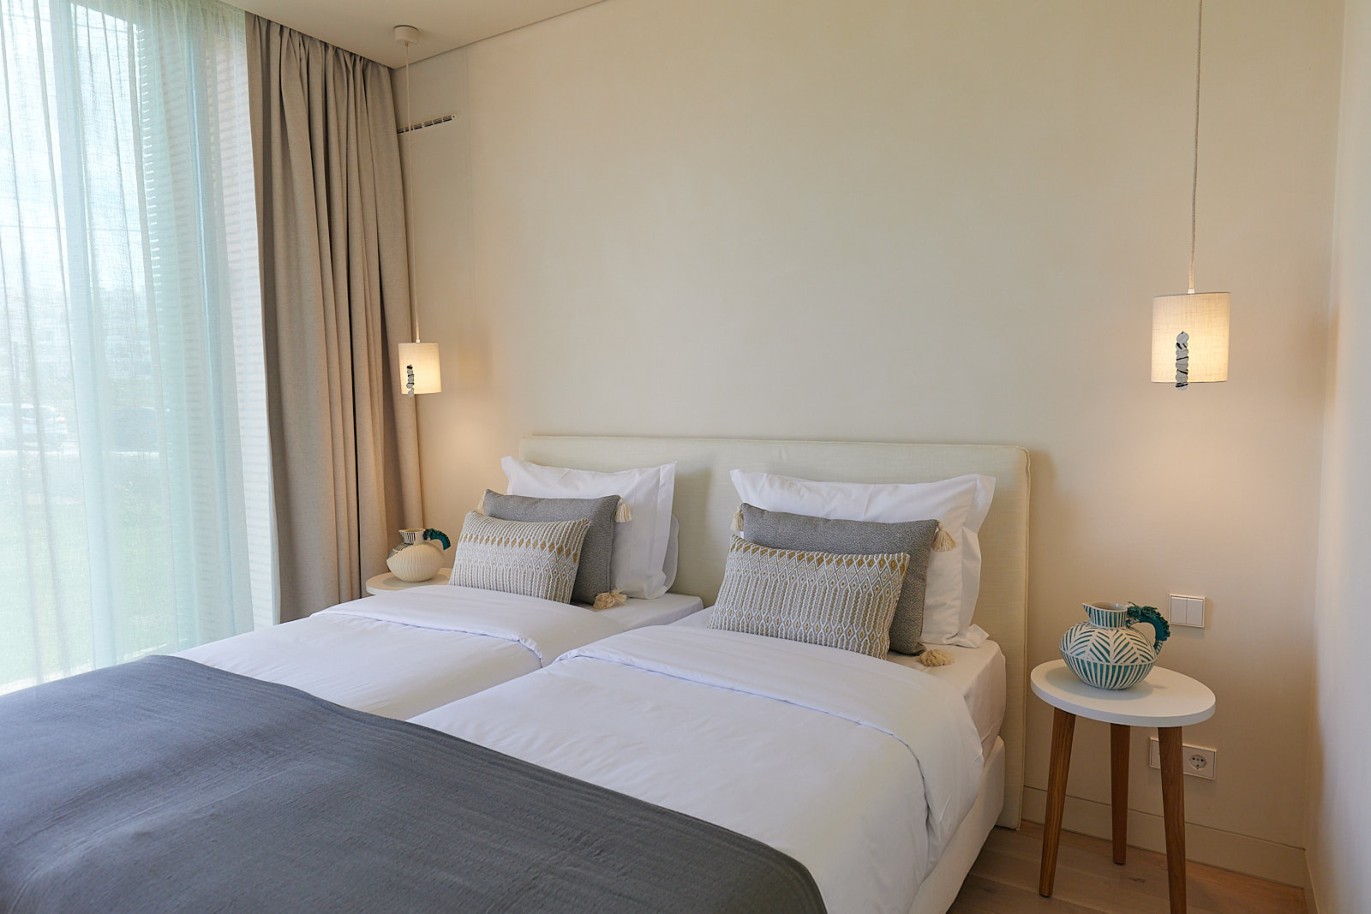 1 bedroom apartment in resort, for sale in Porches, Algarve_228989